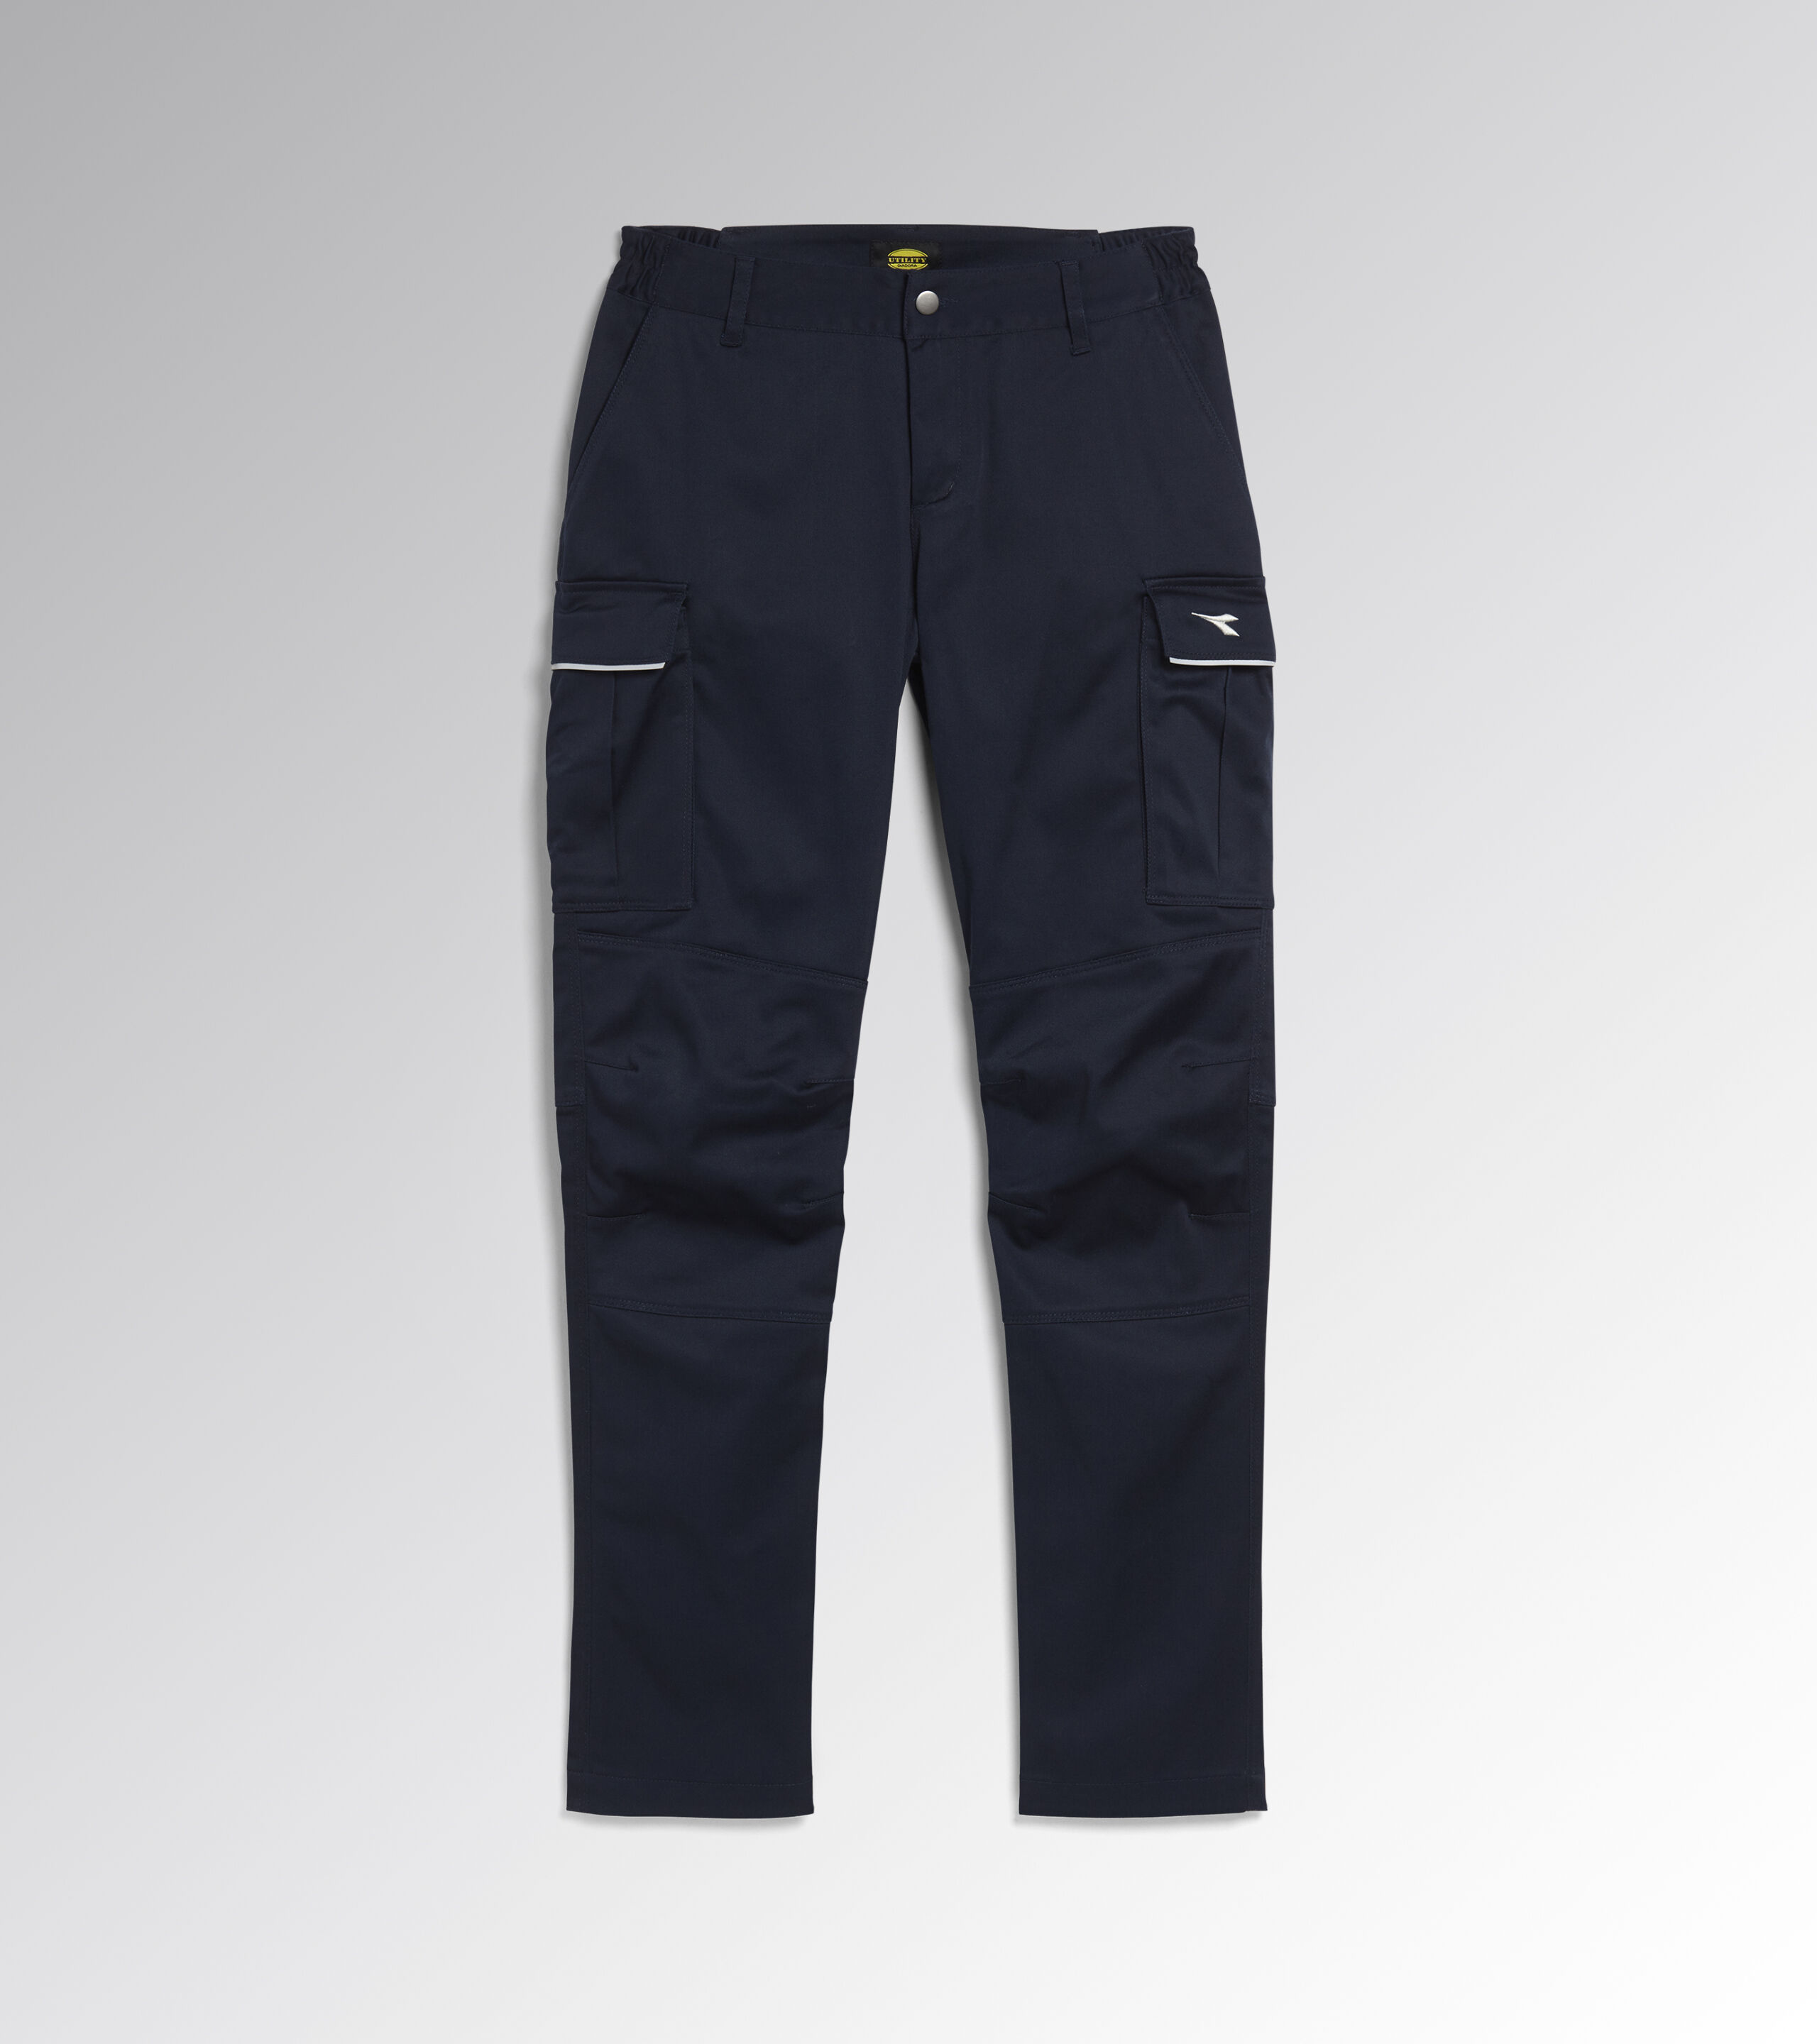 Cargo Pants For Men - Buy Latest Trendy Cargo Pants Online | Lindbergh -  LINDBERGH